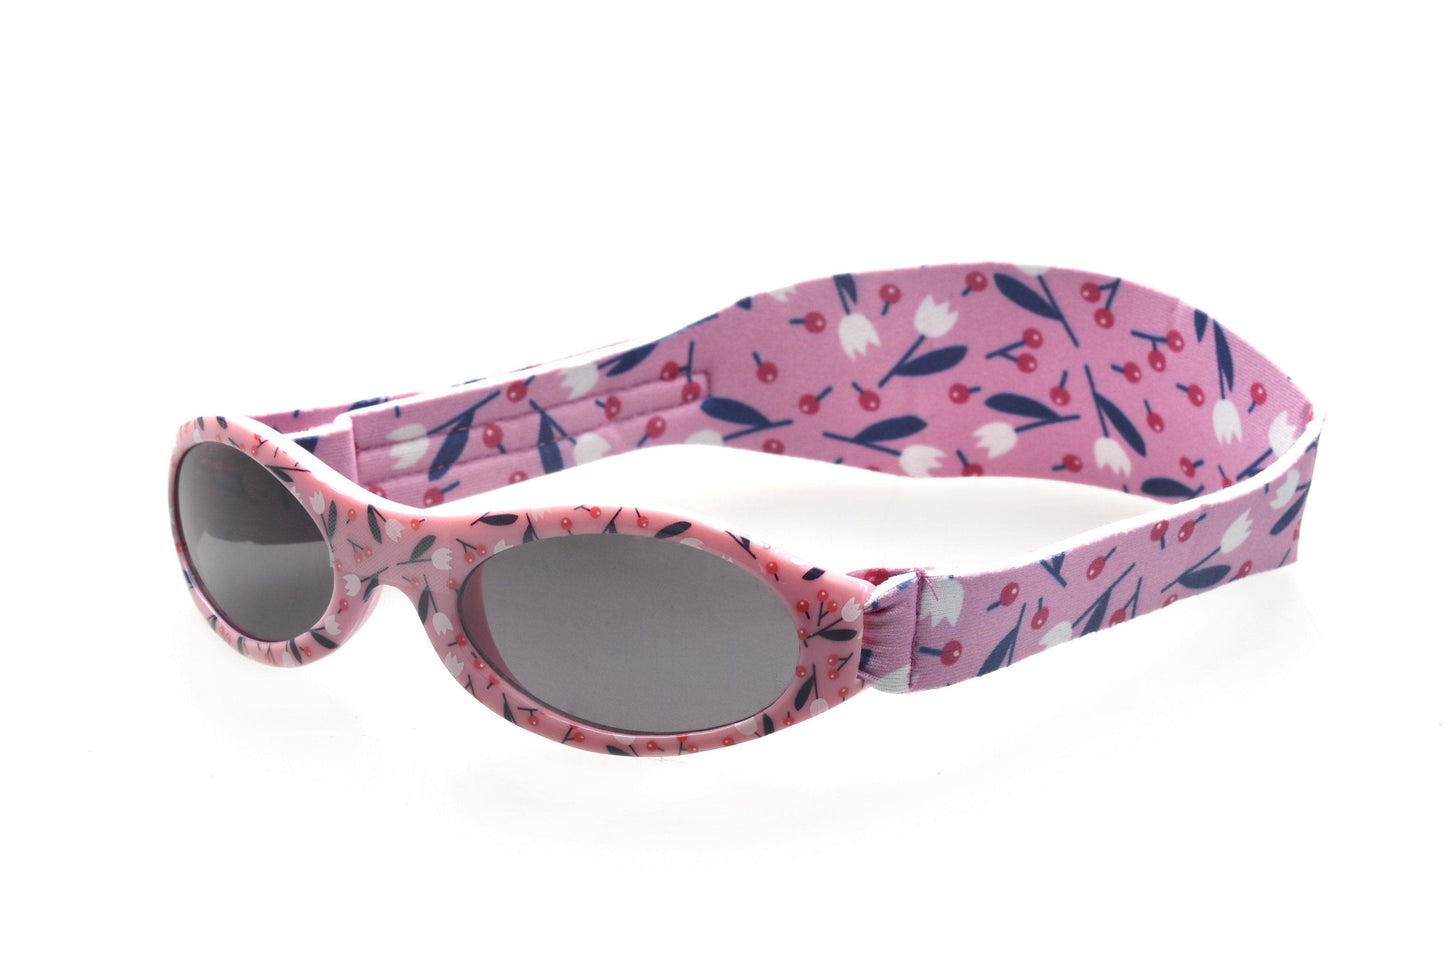 BANZ Sunglasses Baby Sunglasses - Bubzee Polarized Wrap Around Petite Cherry Floral